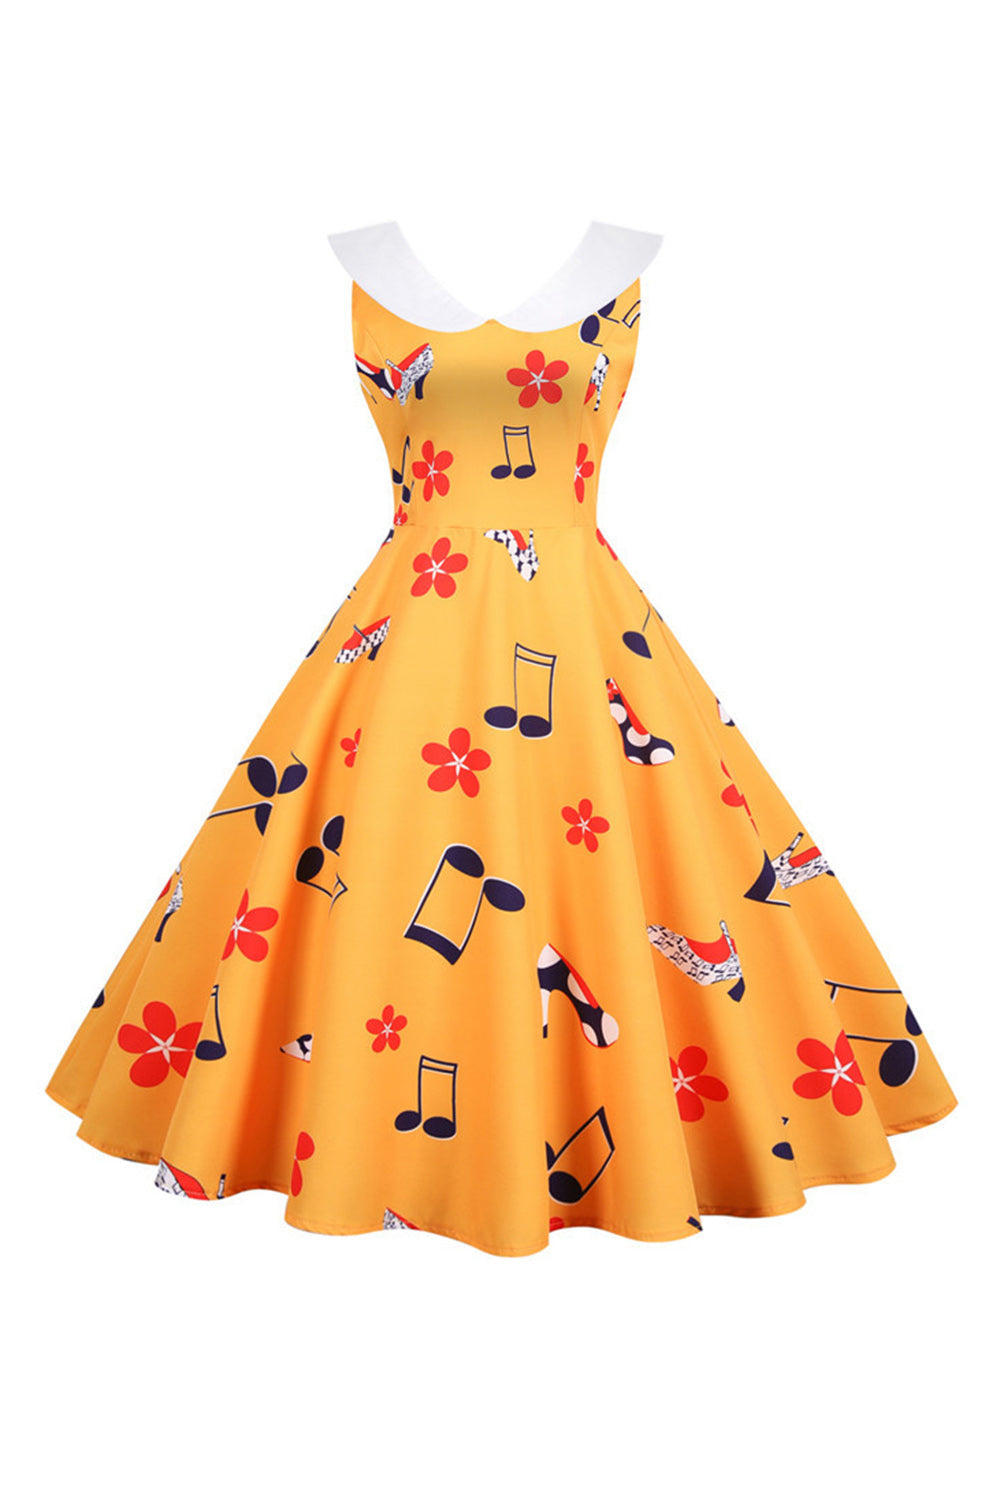 Printed Sleeveless Yellow Vintage 50s Dress